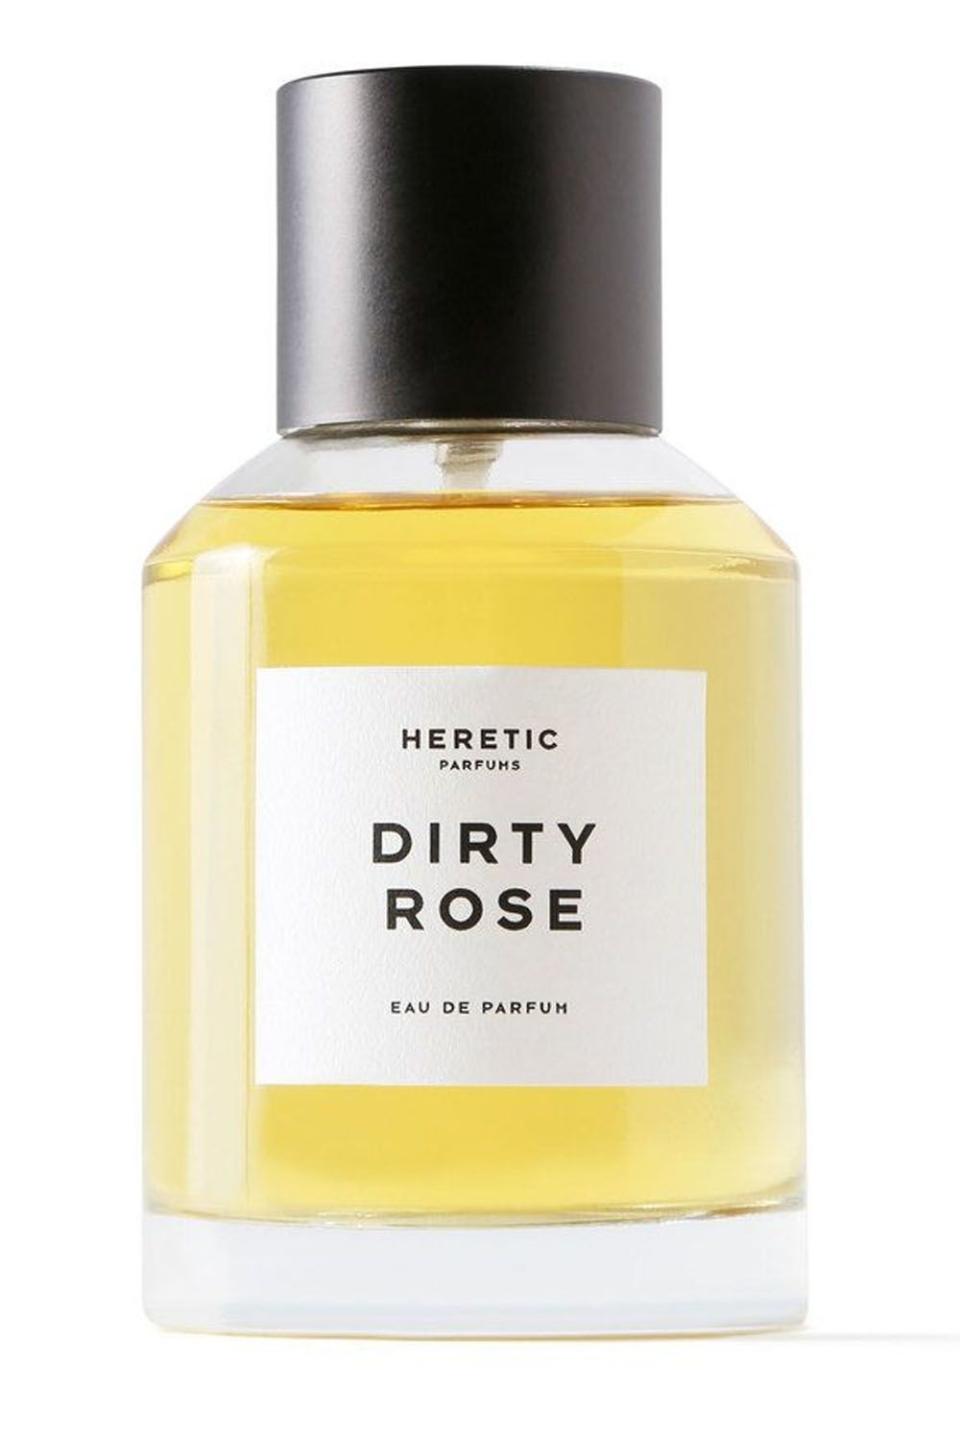 6) Heretic Dirty Rose Eau de Parfum